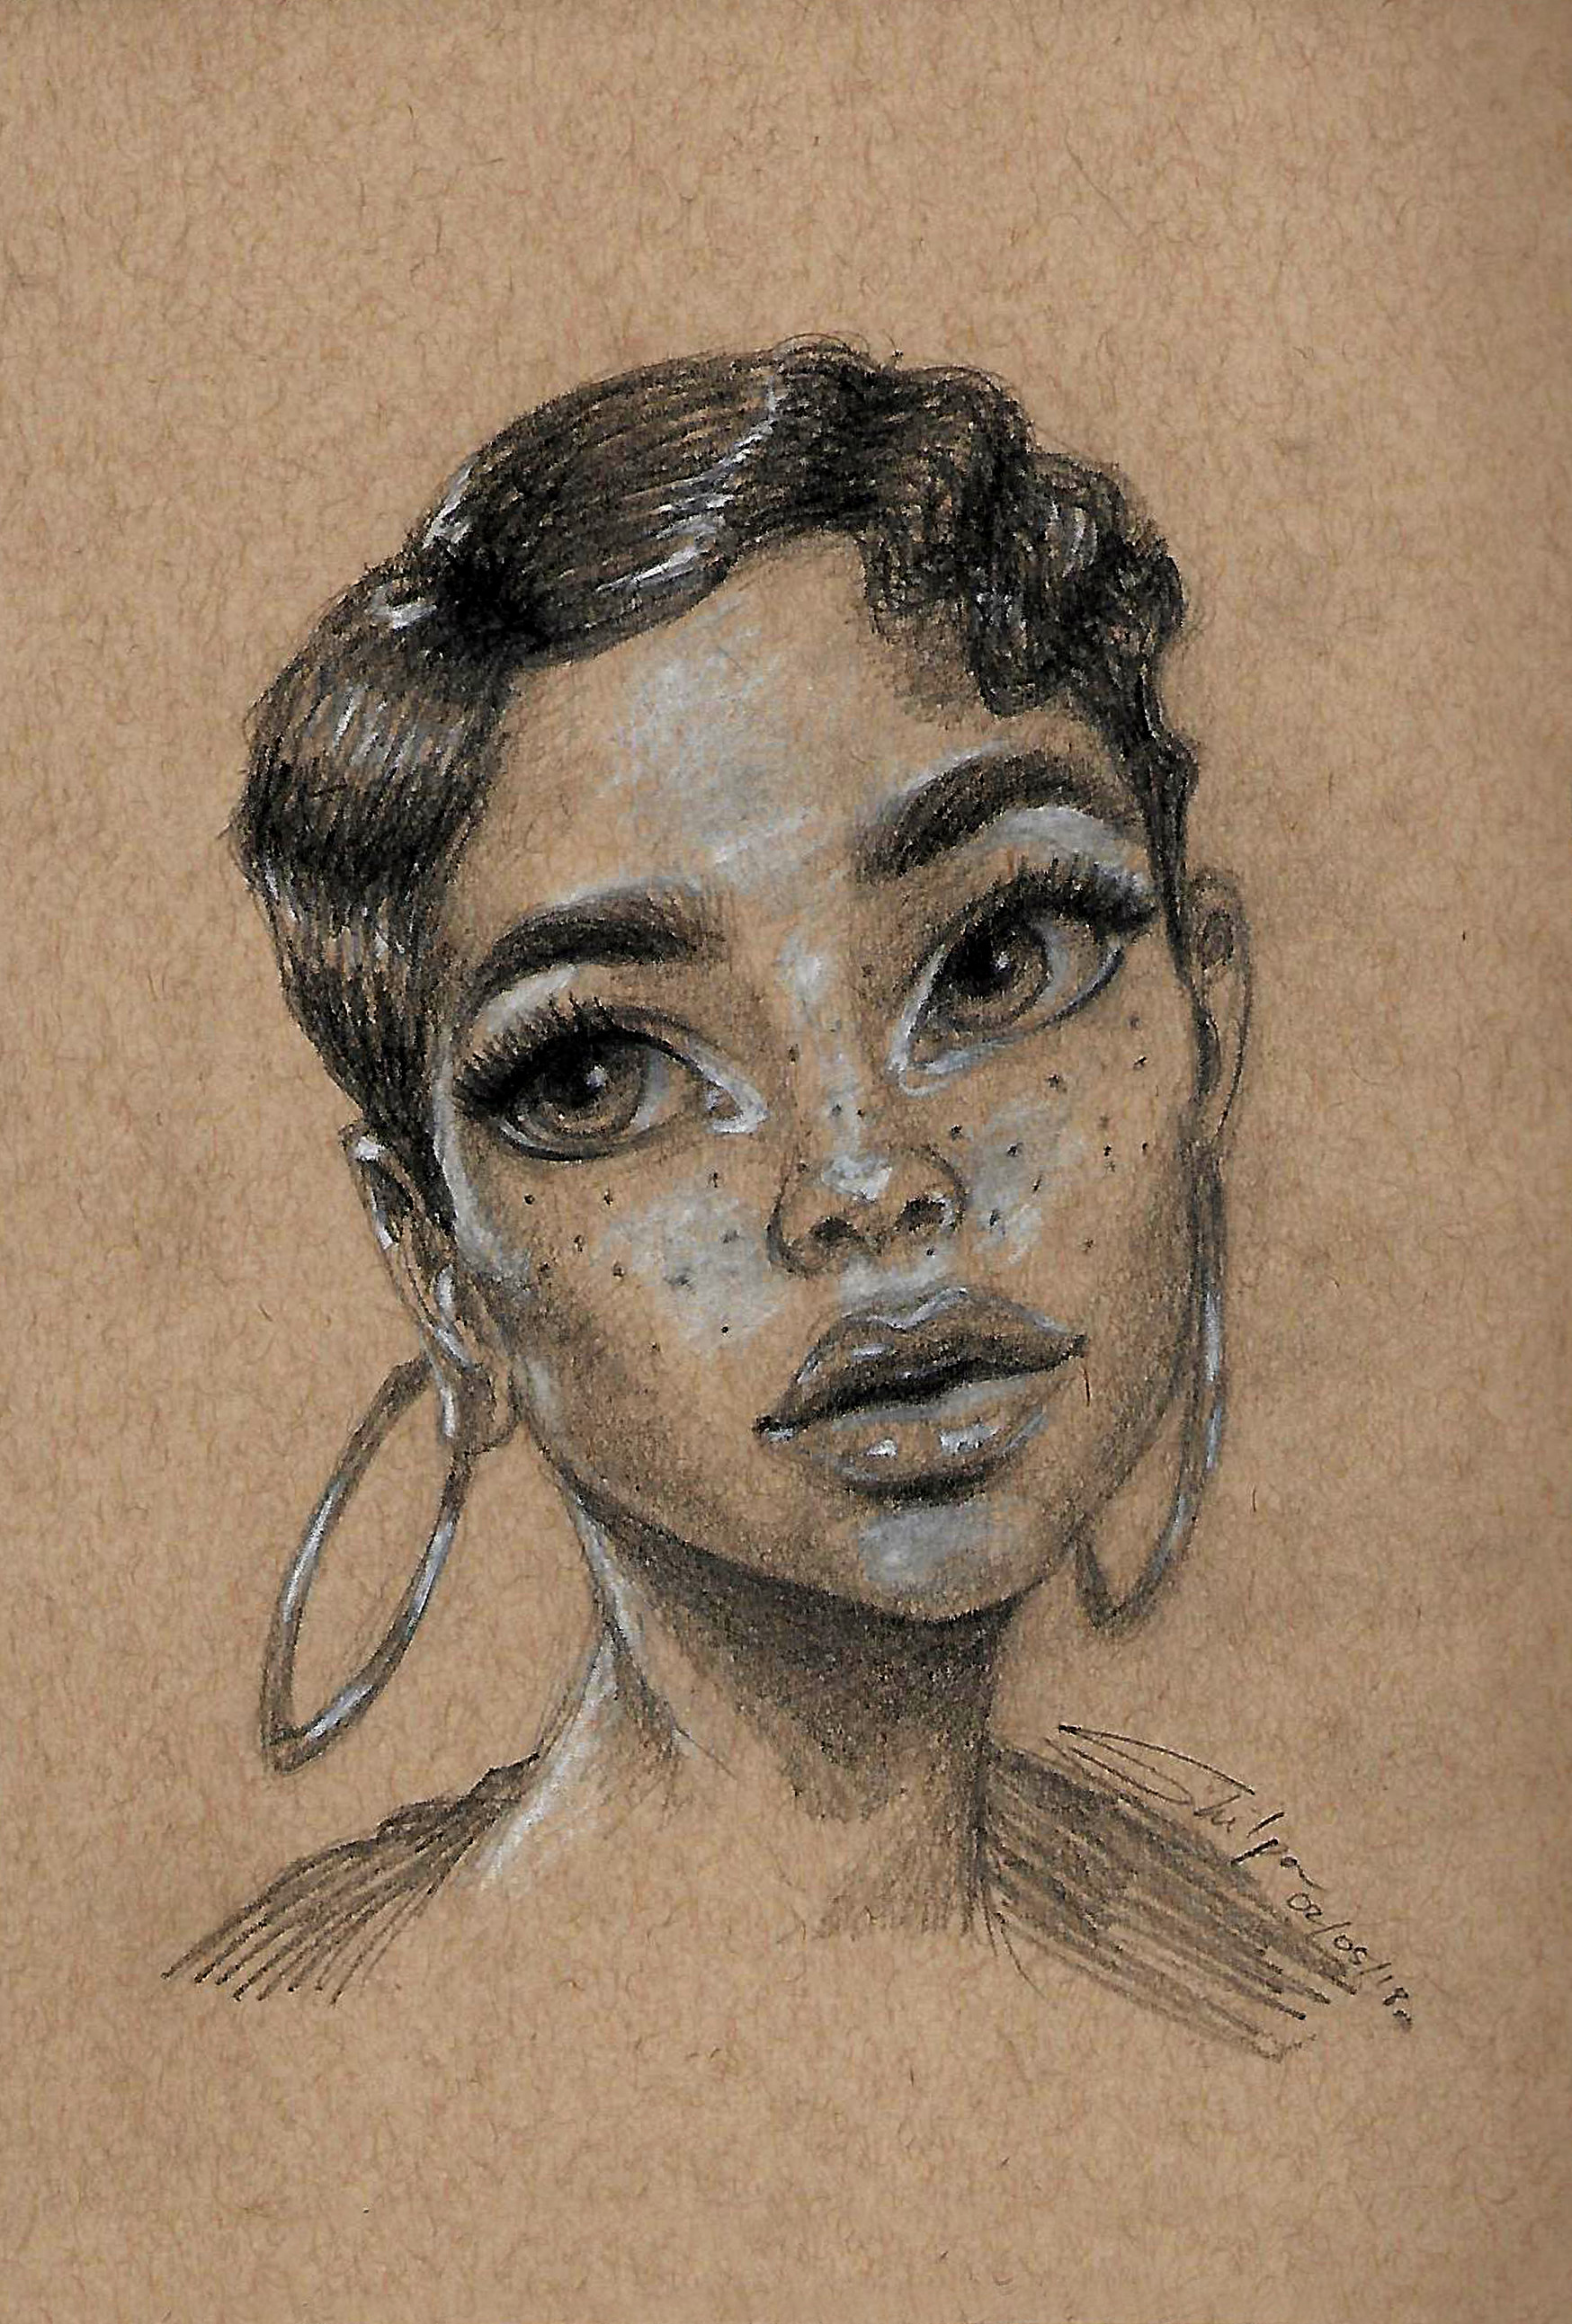 ArtStation - Stylized Portrait 1 - Aiyanna Lewis